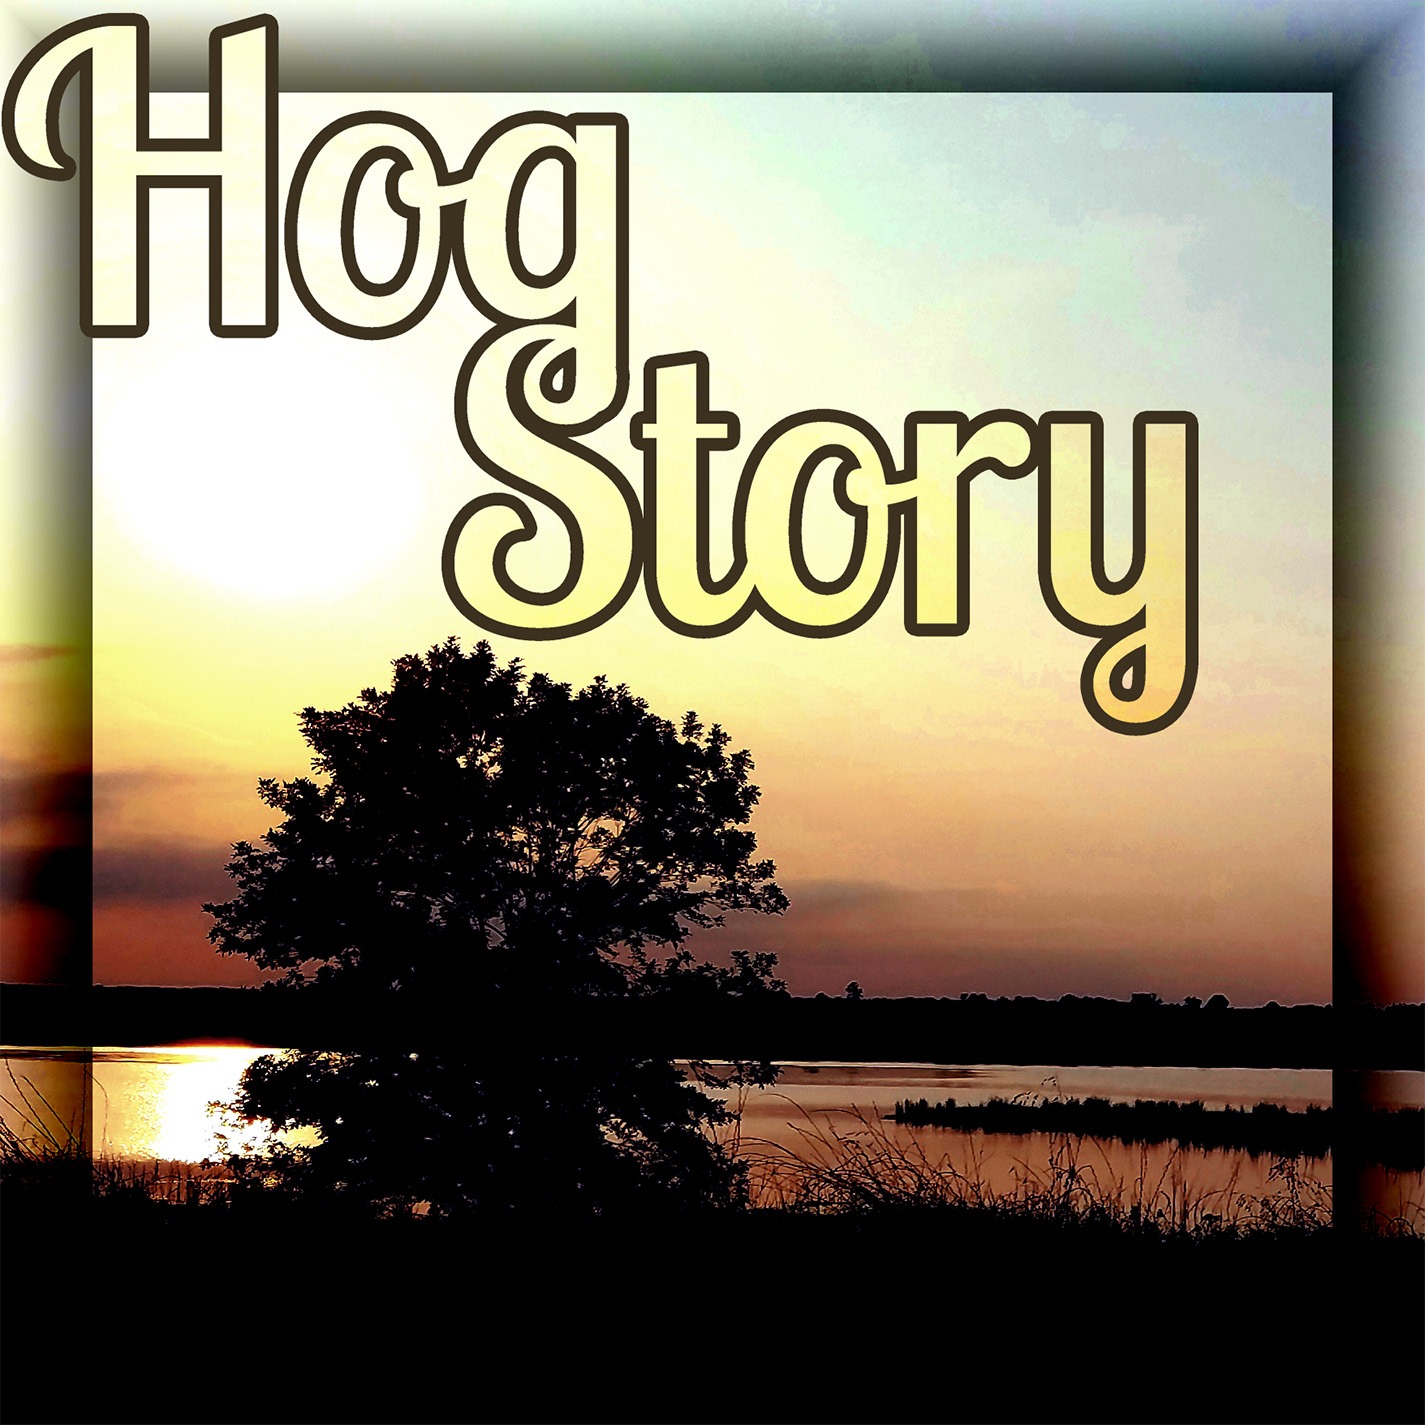 Hog Story #341 – Drinks Wabbit